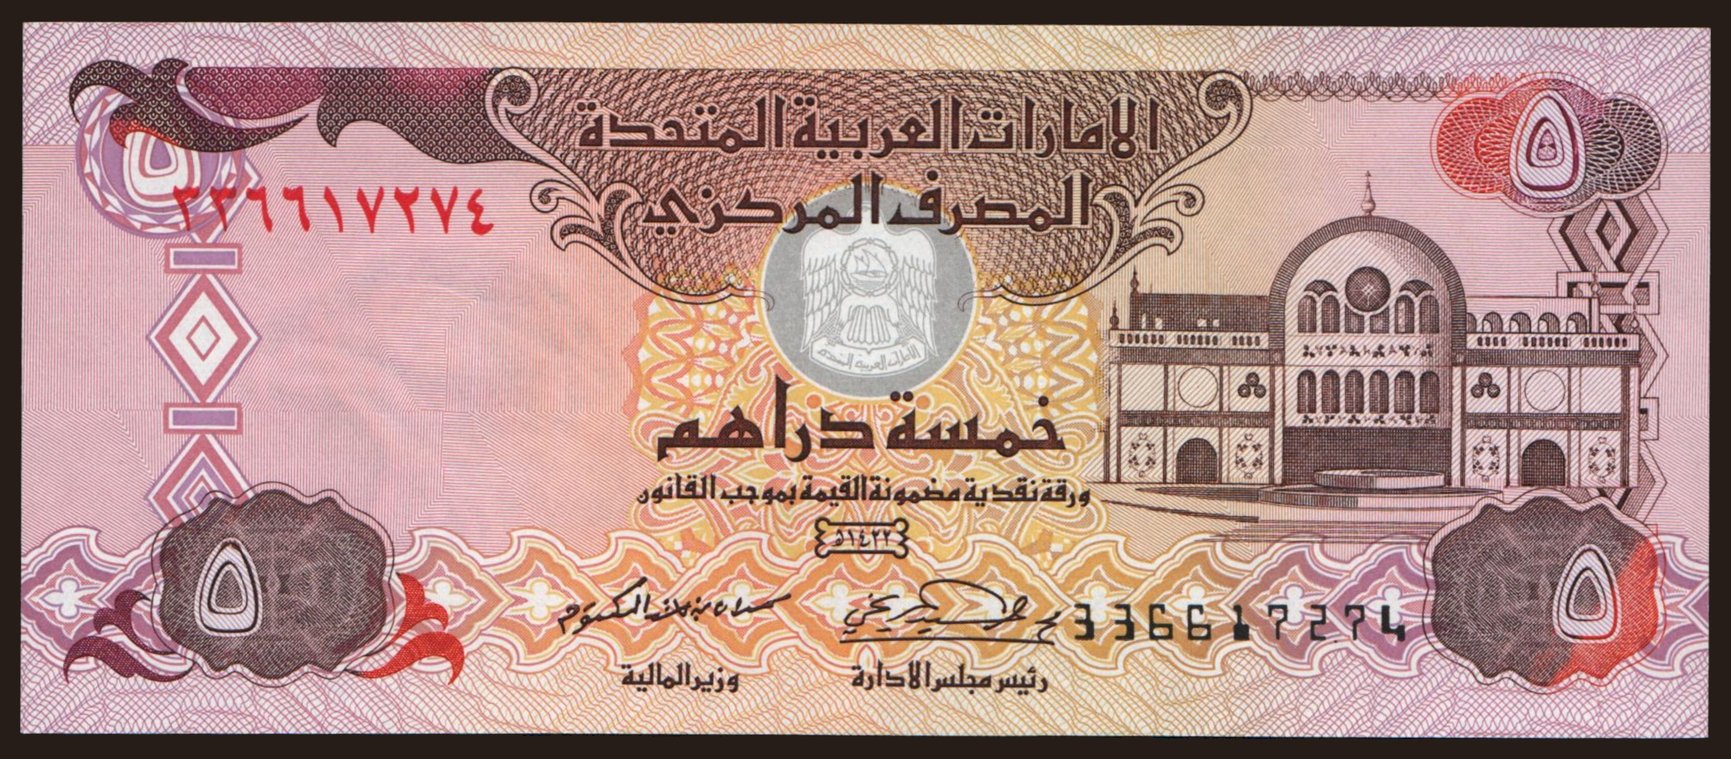 5 dirhams, 2001